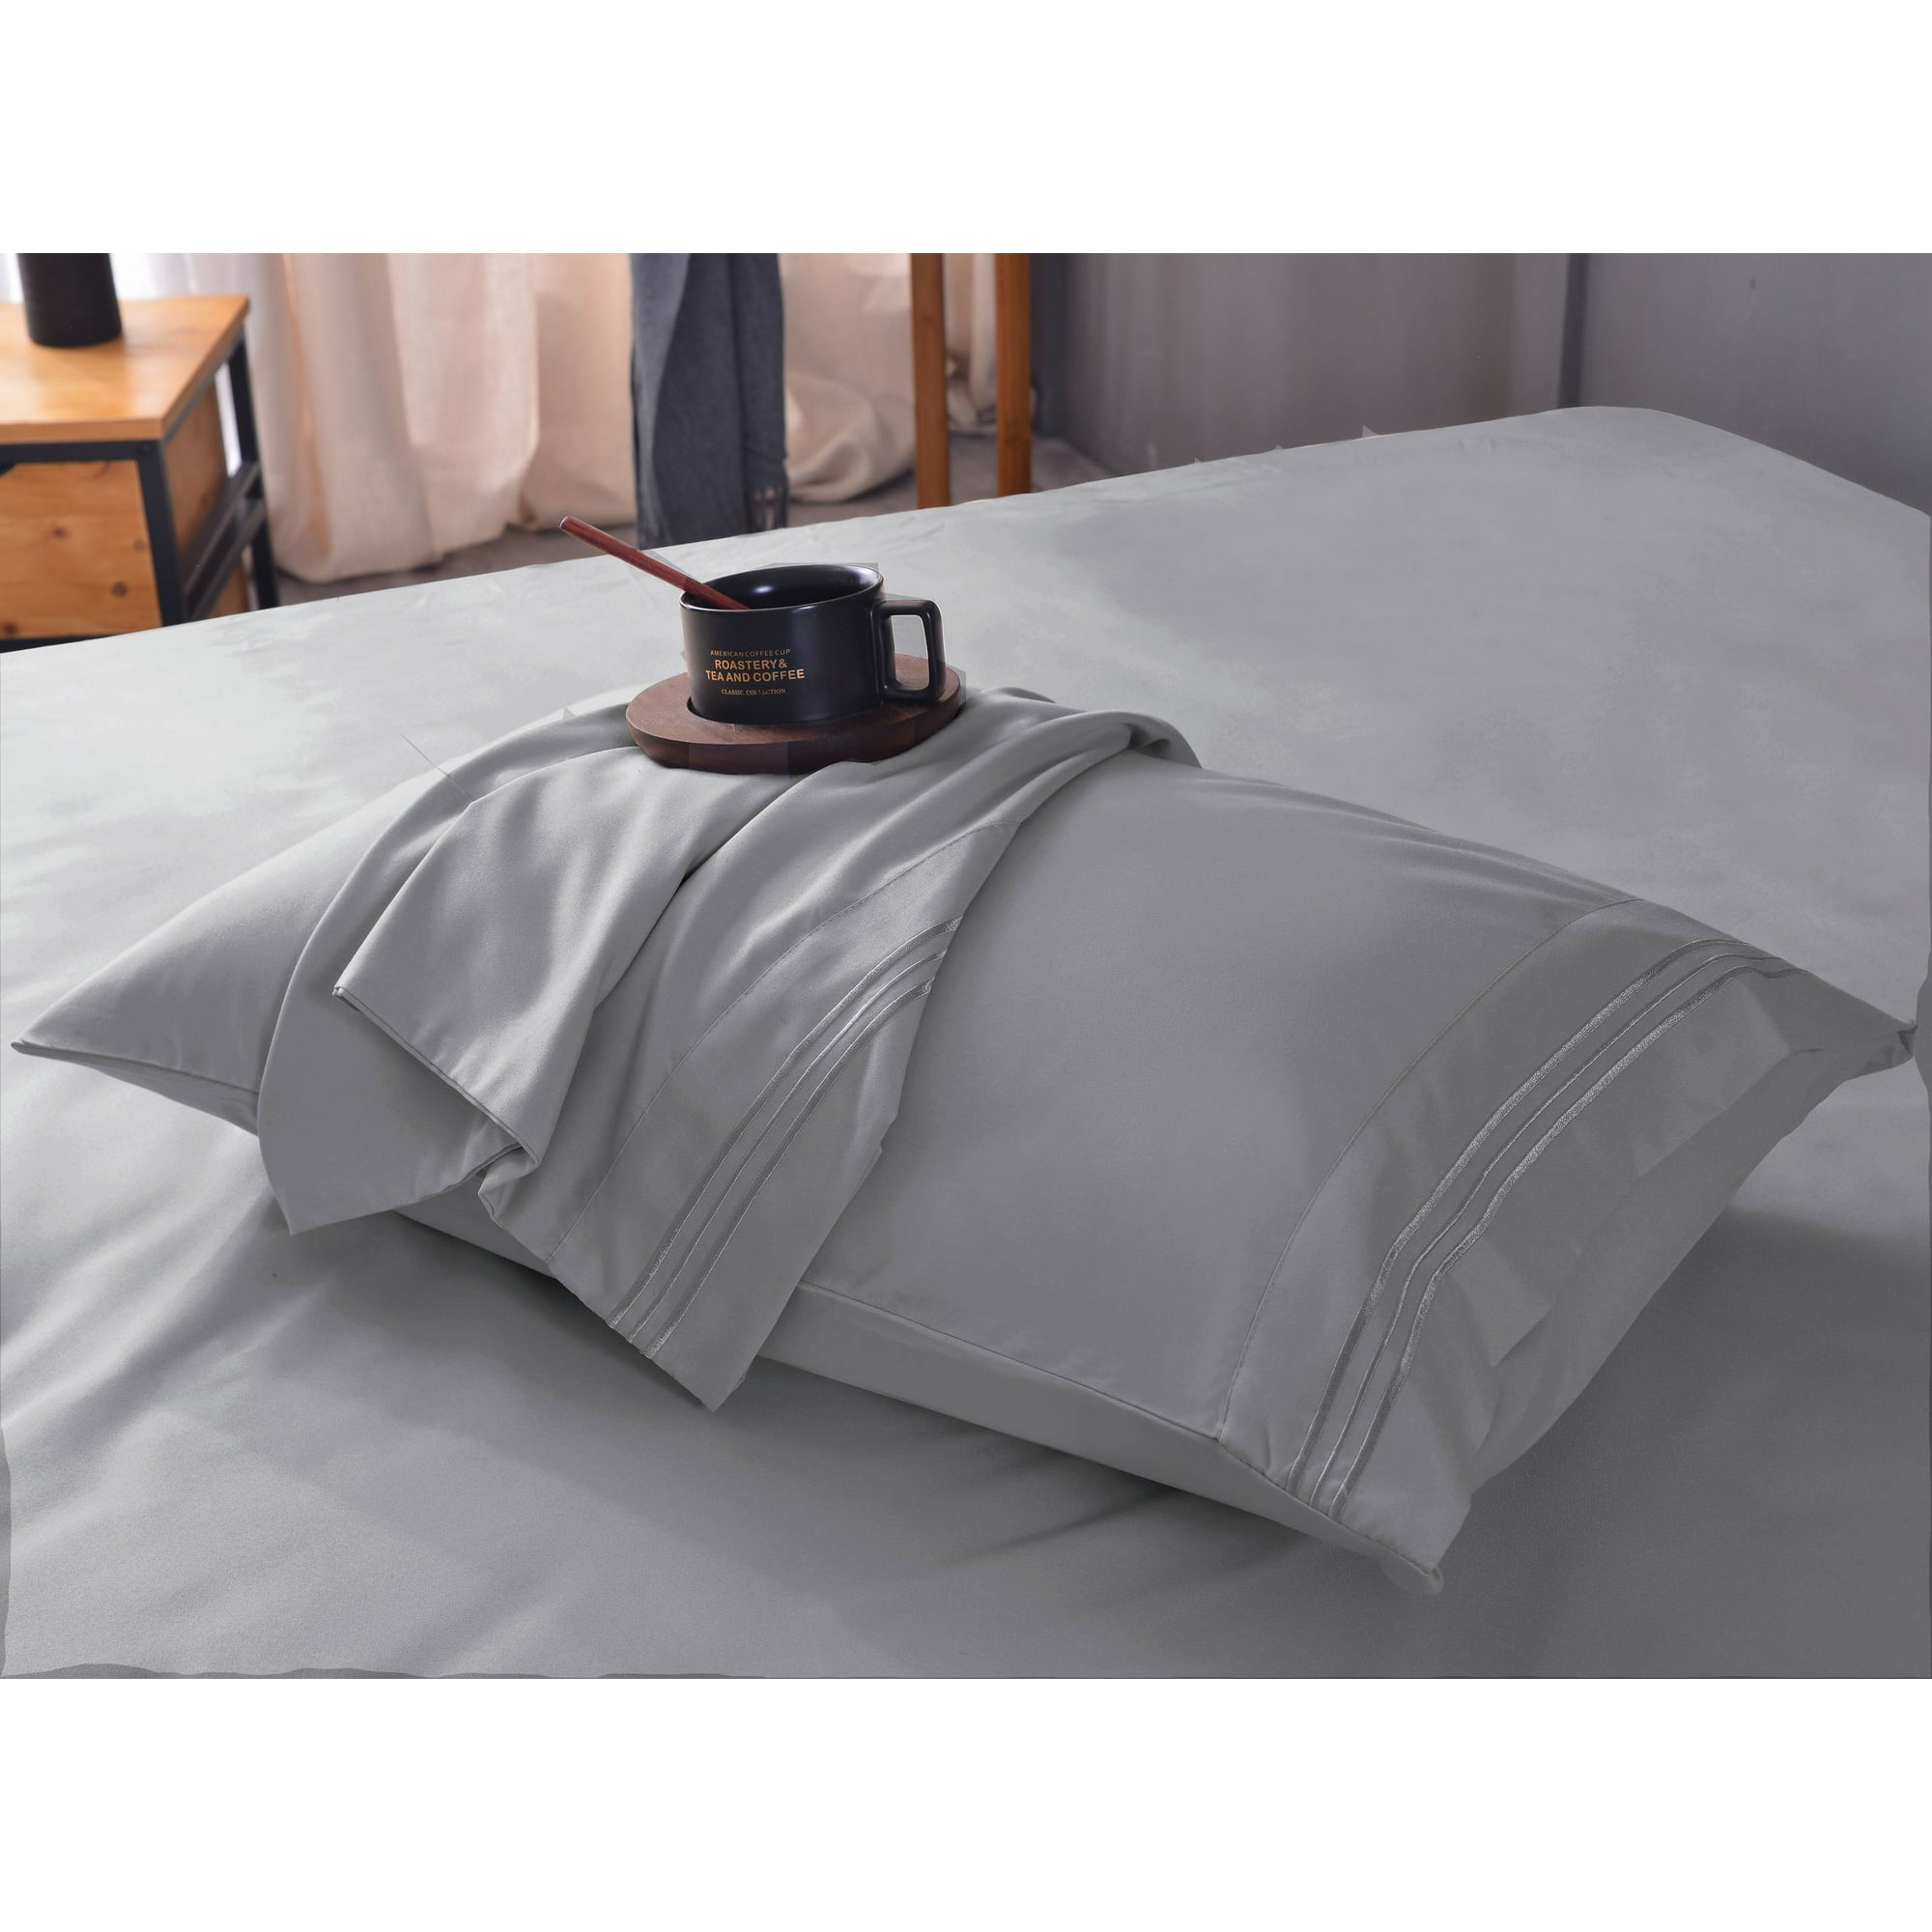 Comfylife Bamboo Derived Rayon Pillowcase Set-Moisture Wicking, No Fading- Queen (2 Pieces)-Light Grey